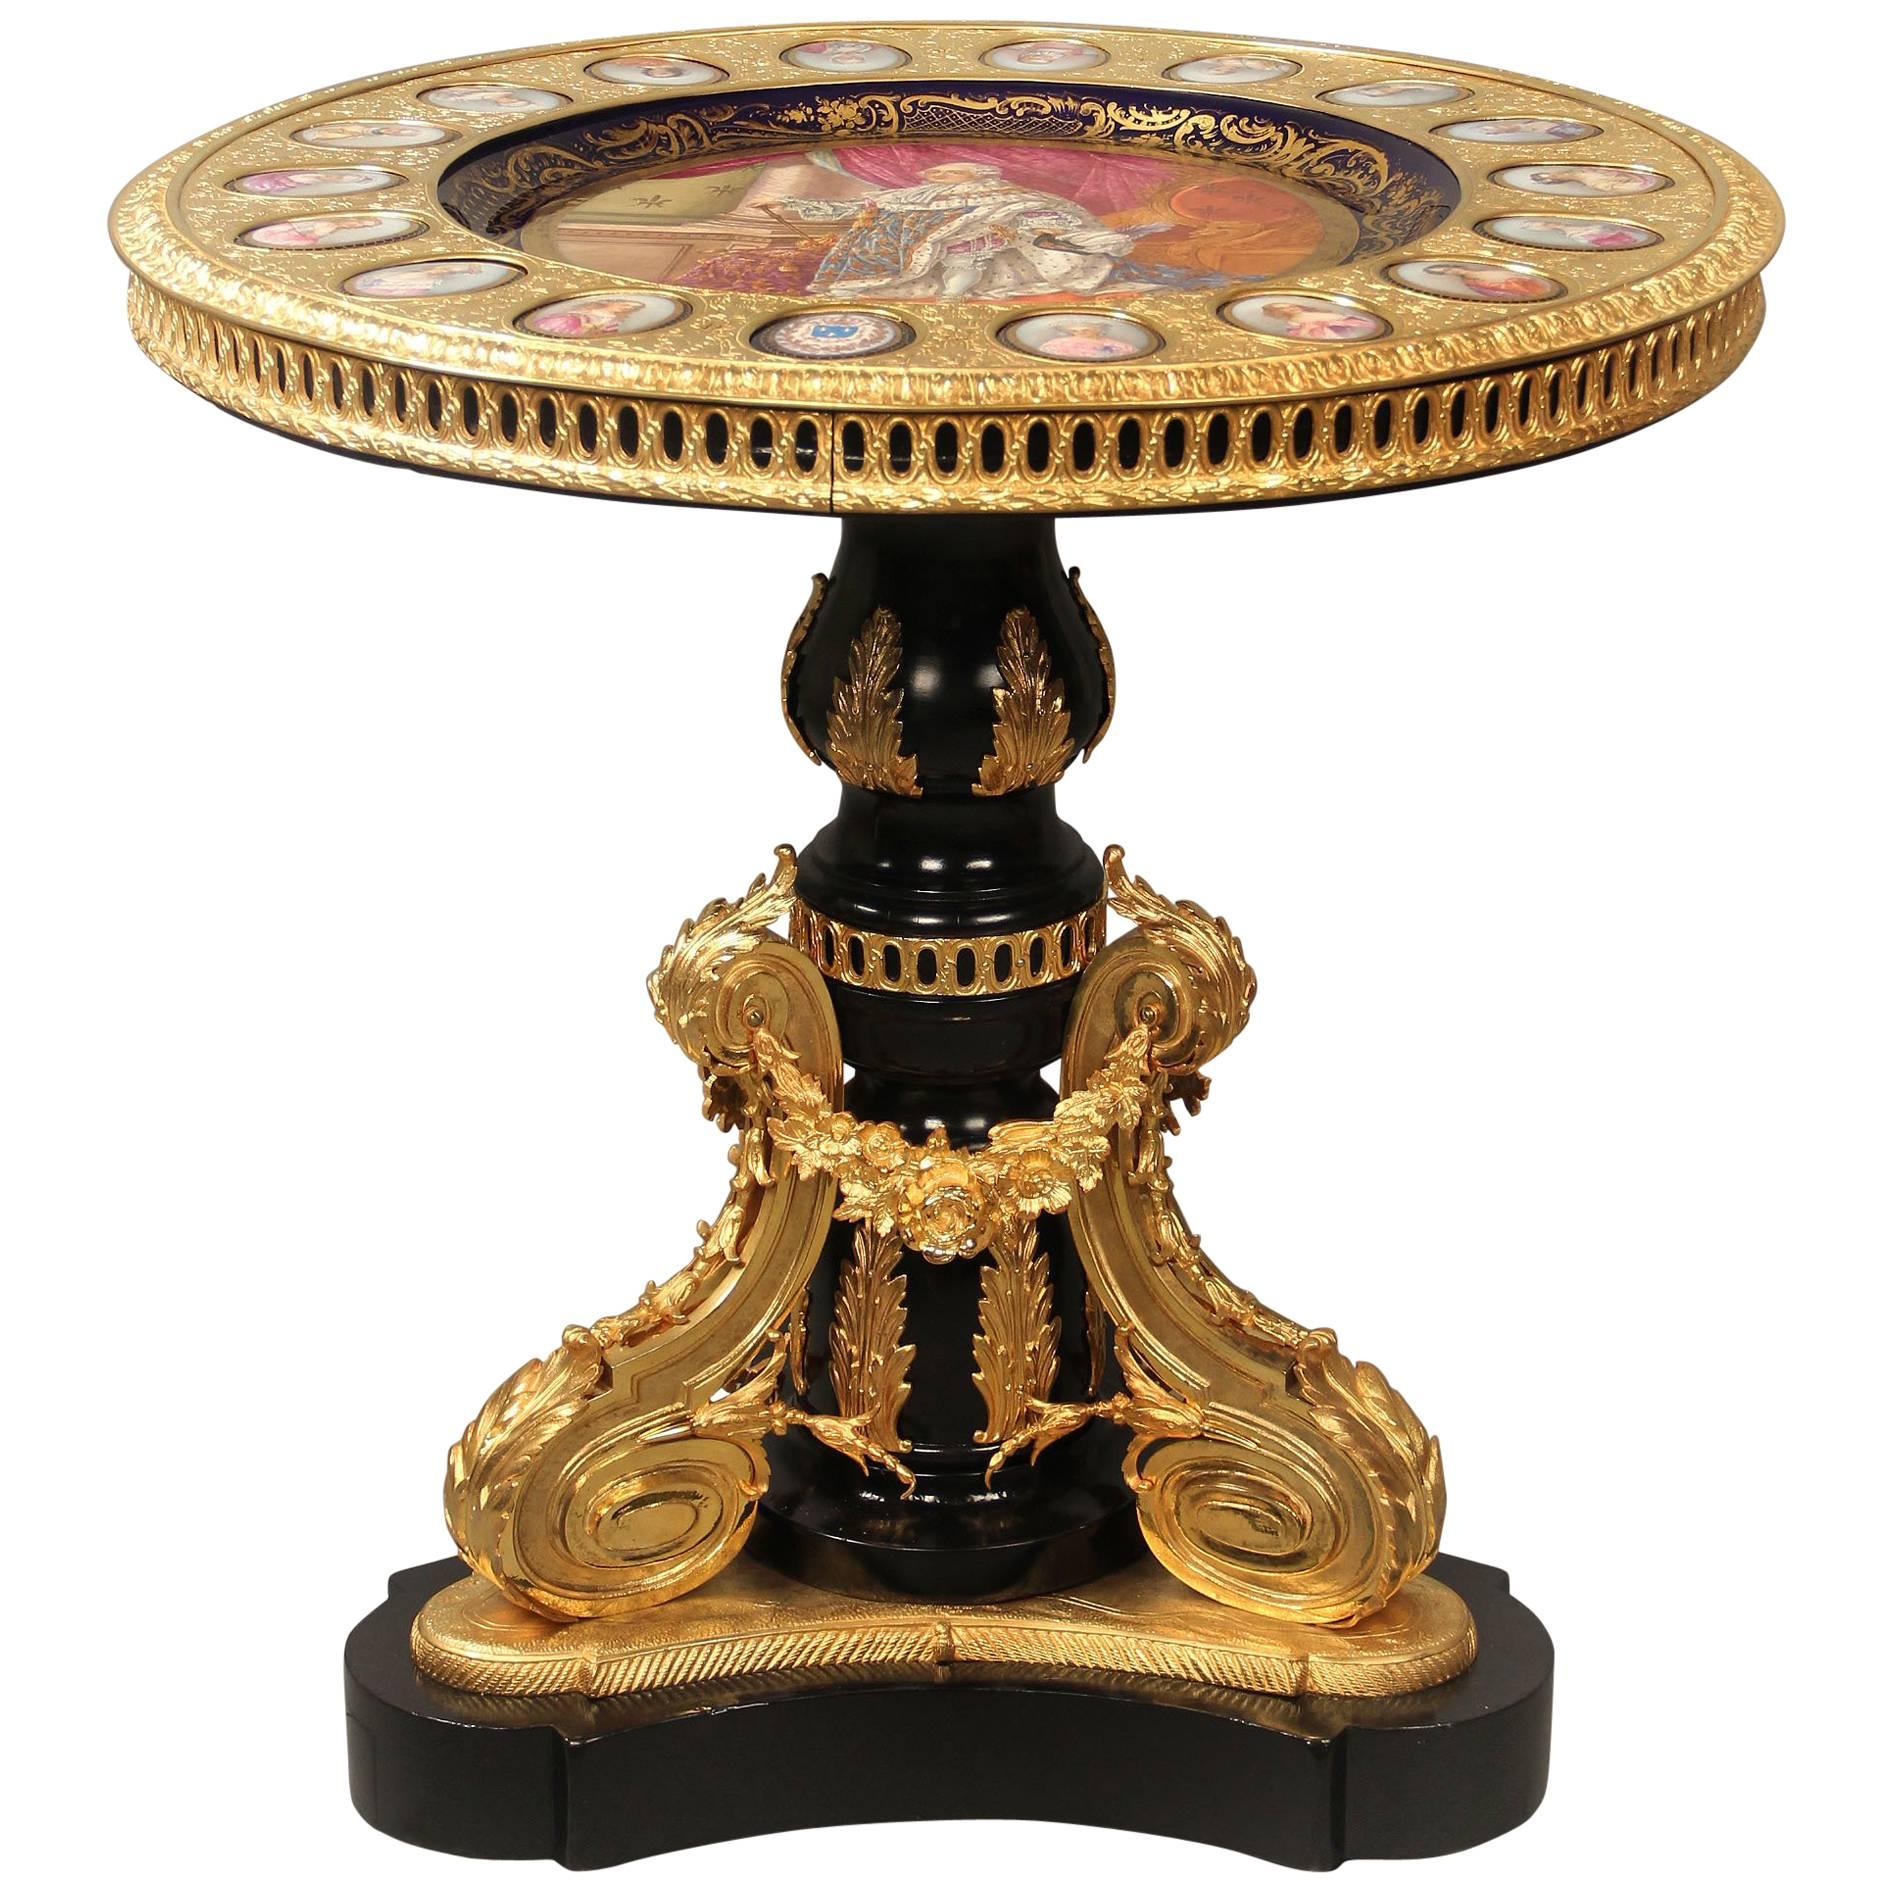 Late 19th Century Gilt Bronze-Mounted Sèvres Style Porcelain Centre Table